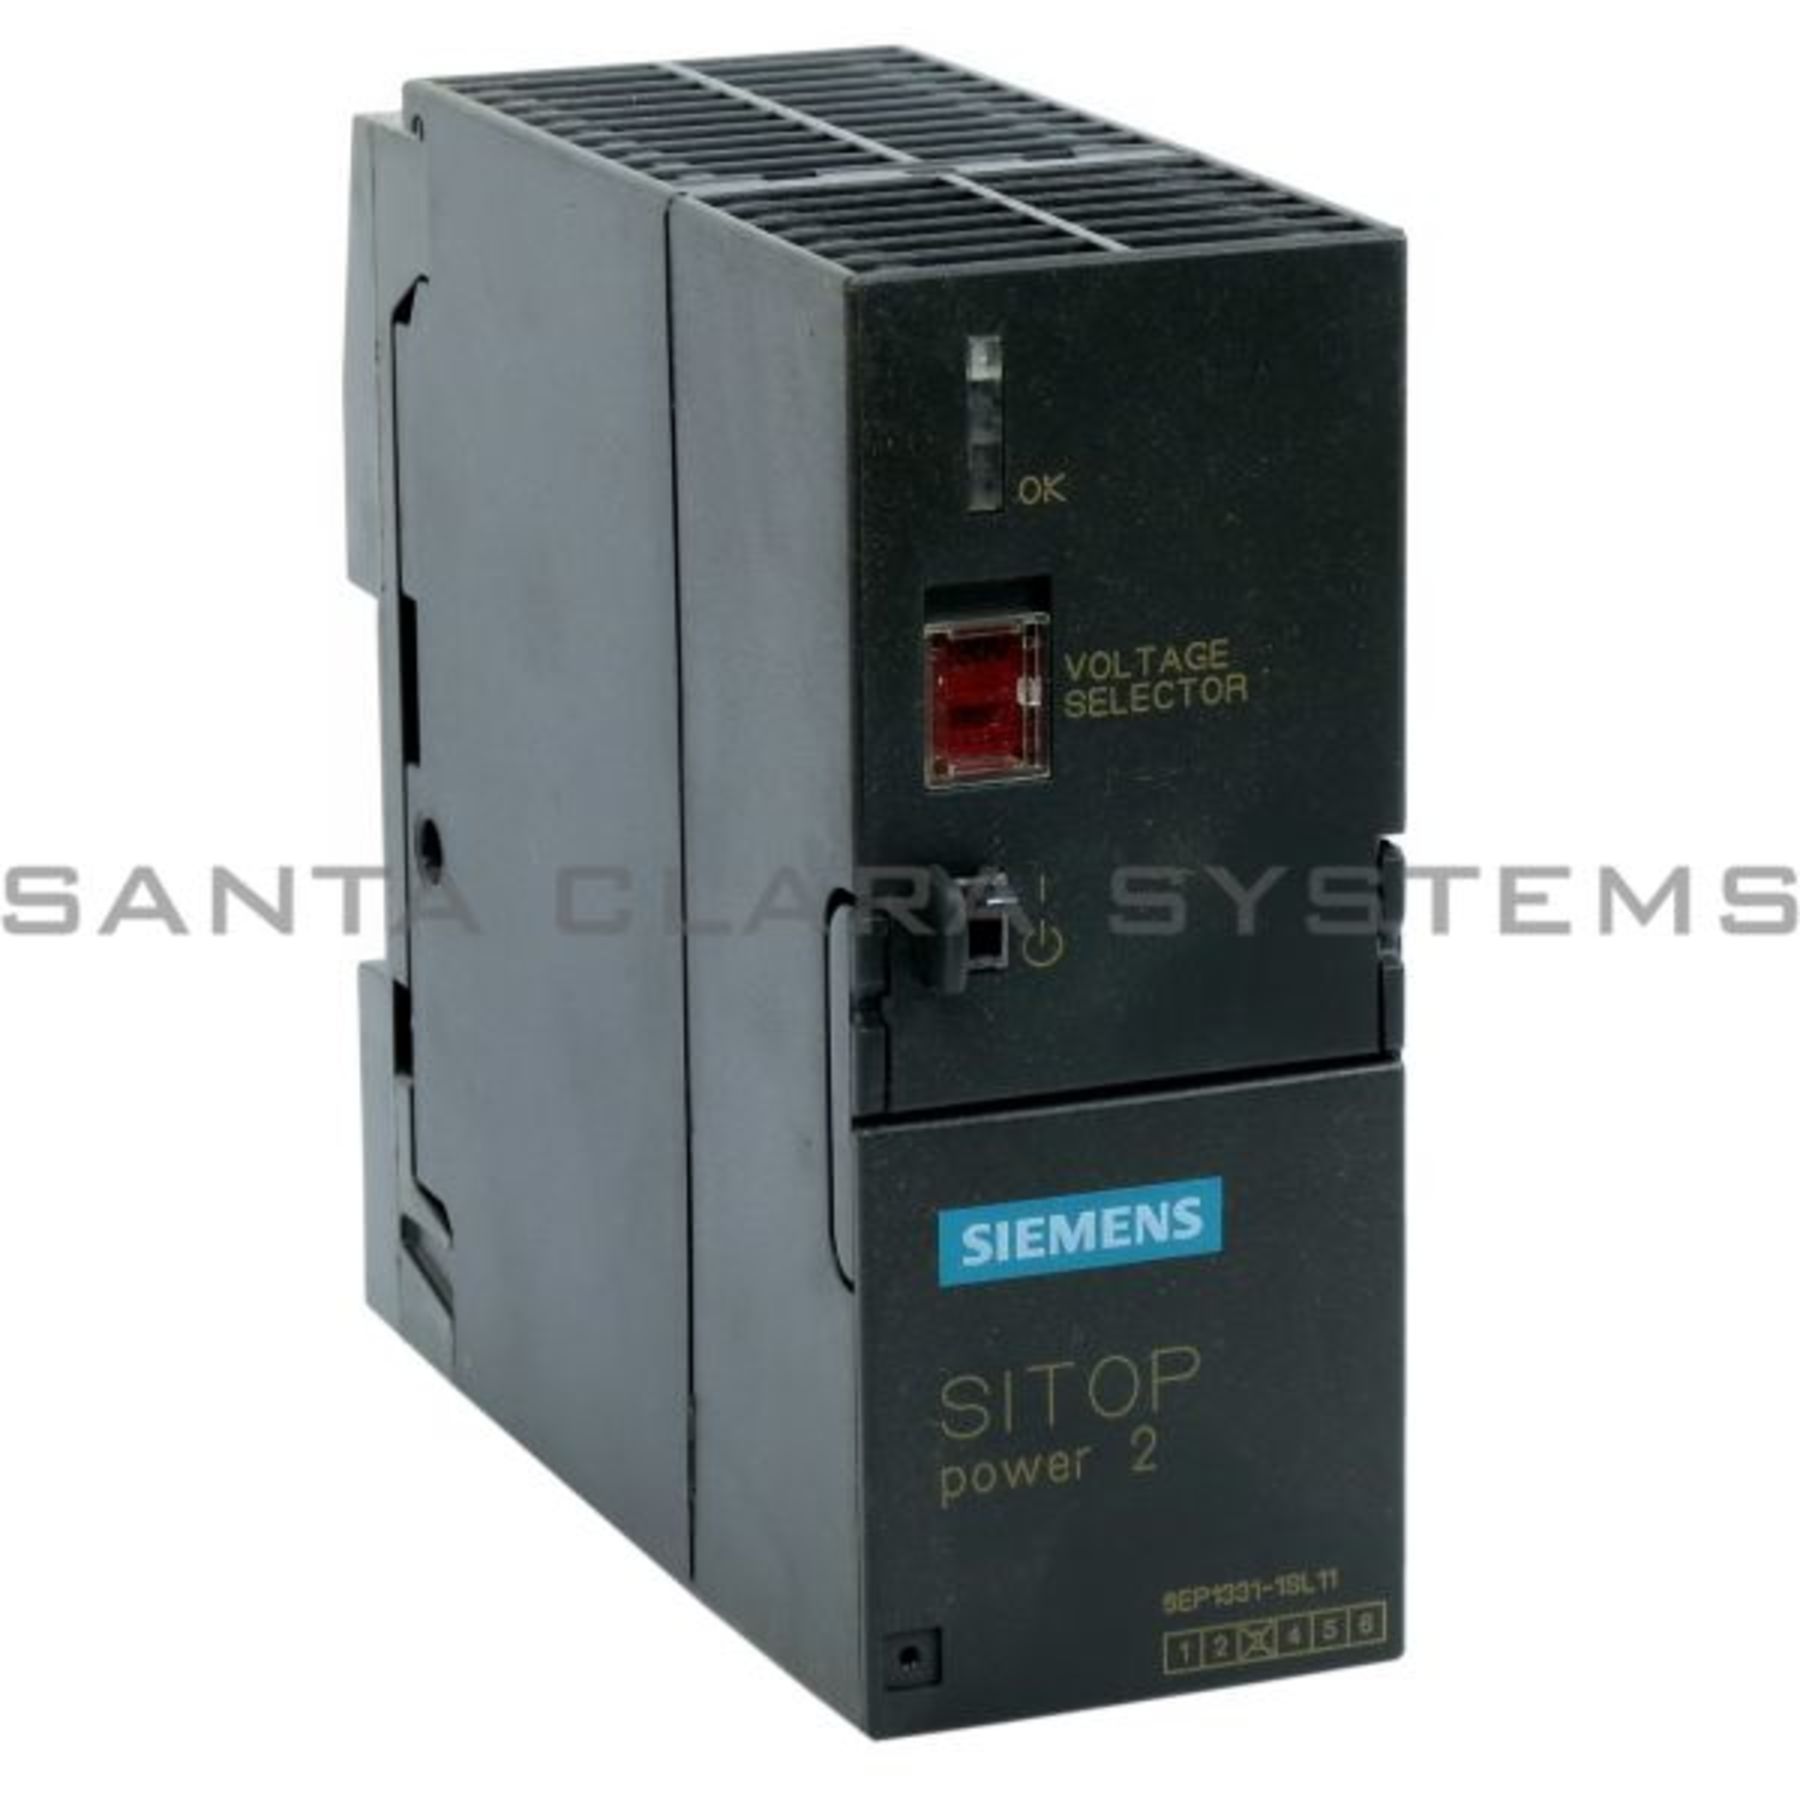 Siemens 6EP1 331-1SL11 SITOP power 2 